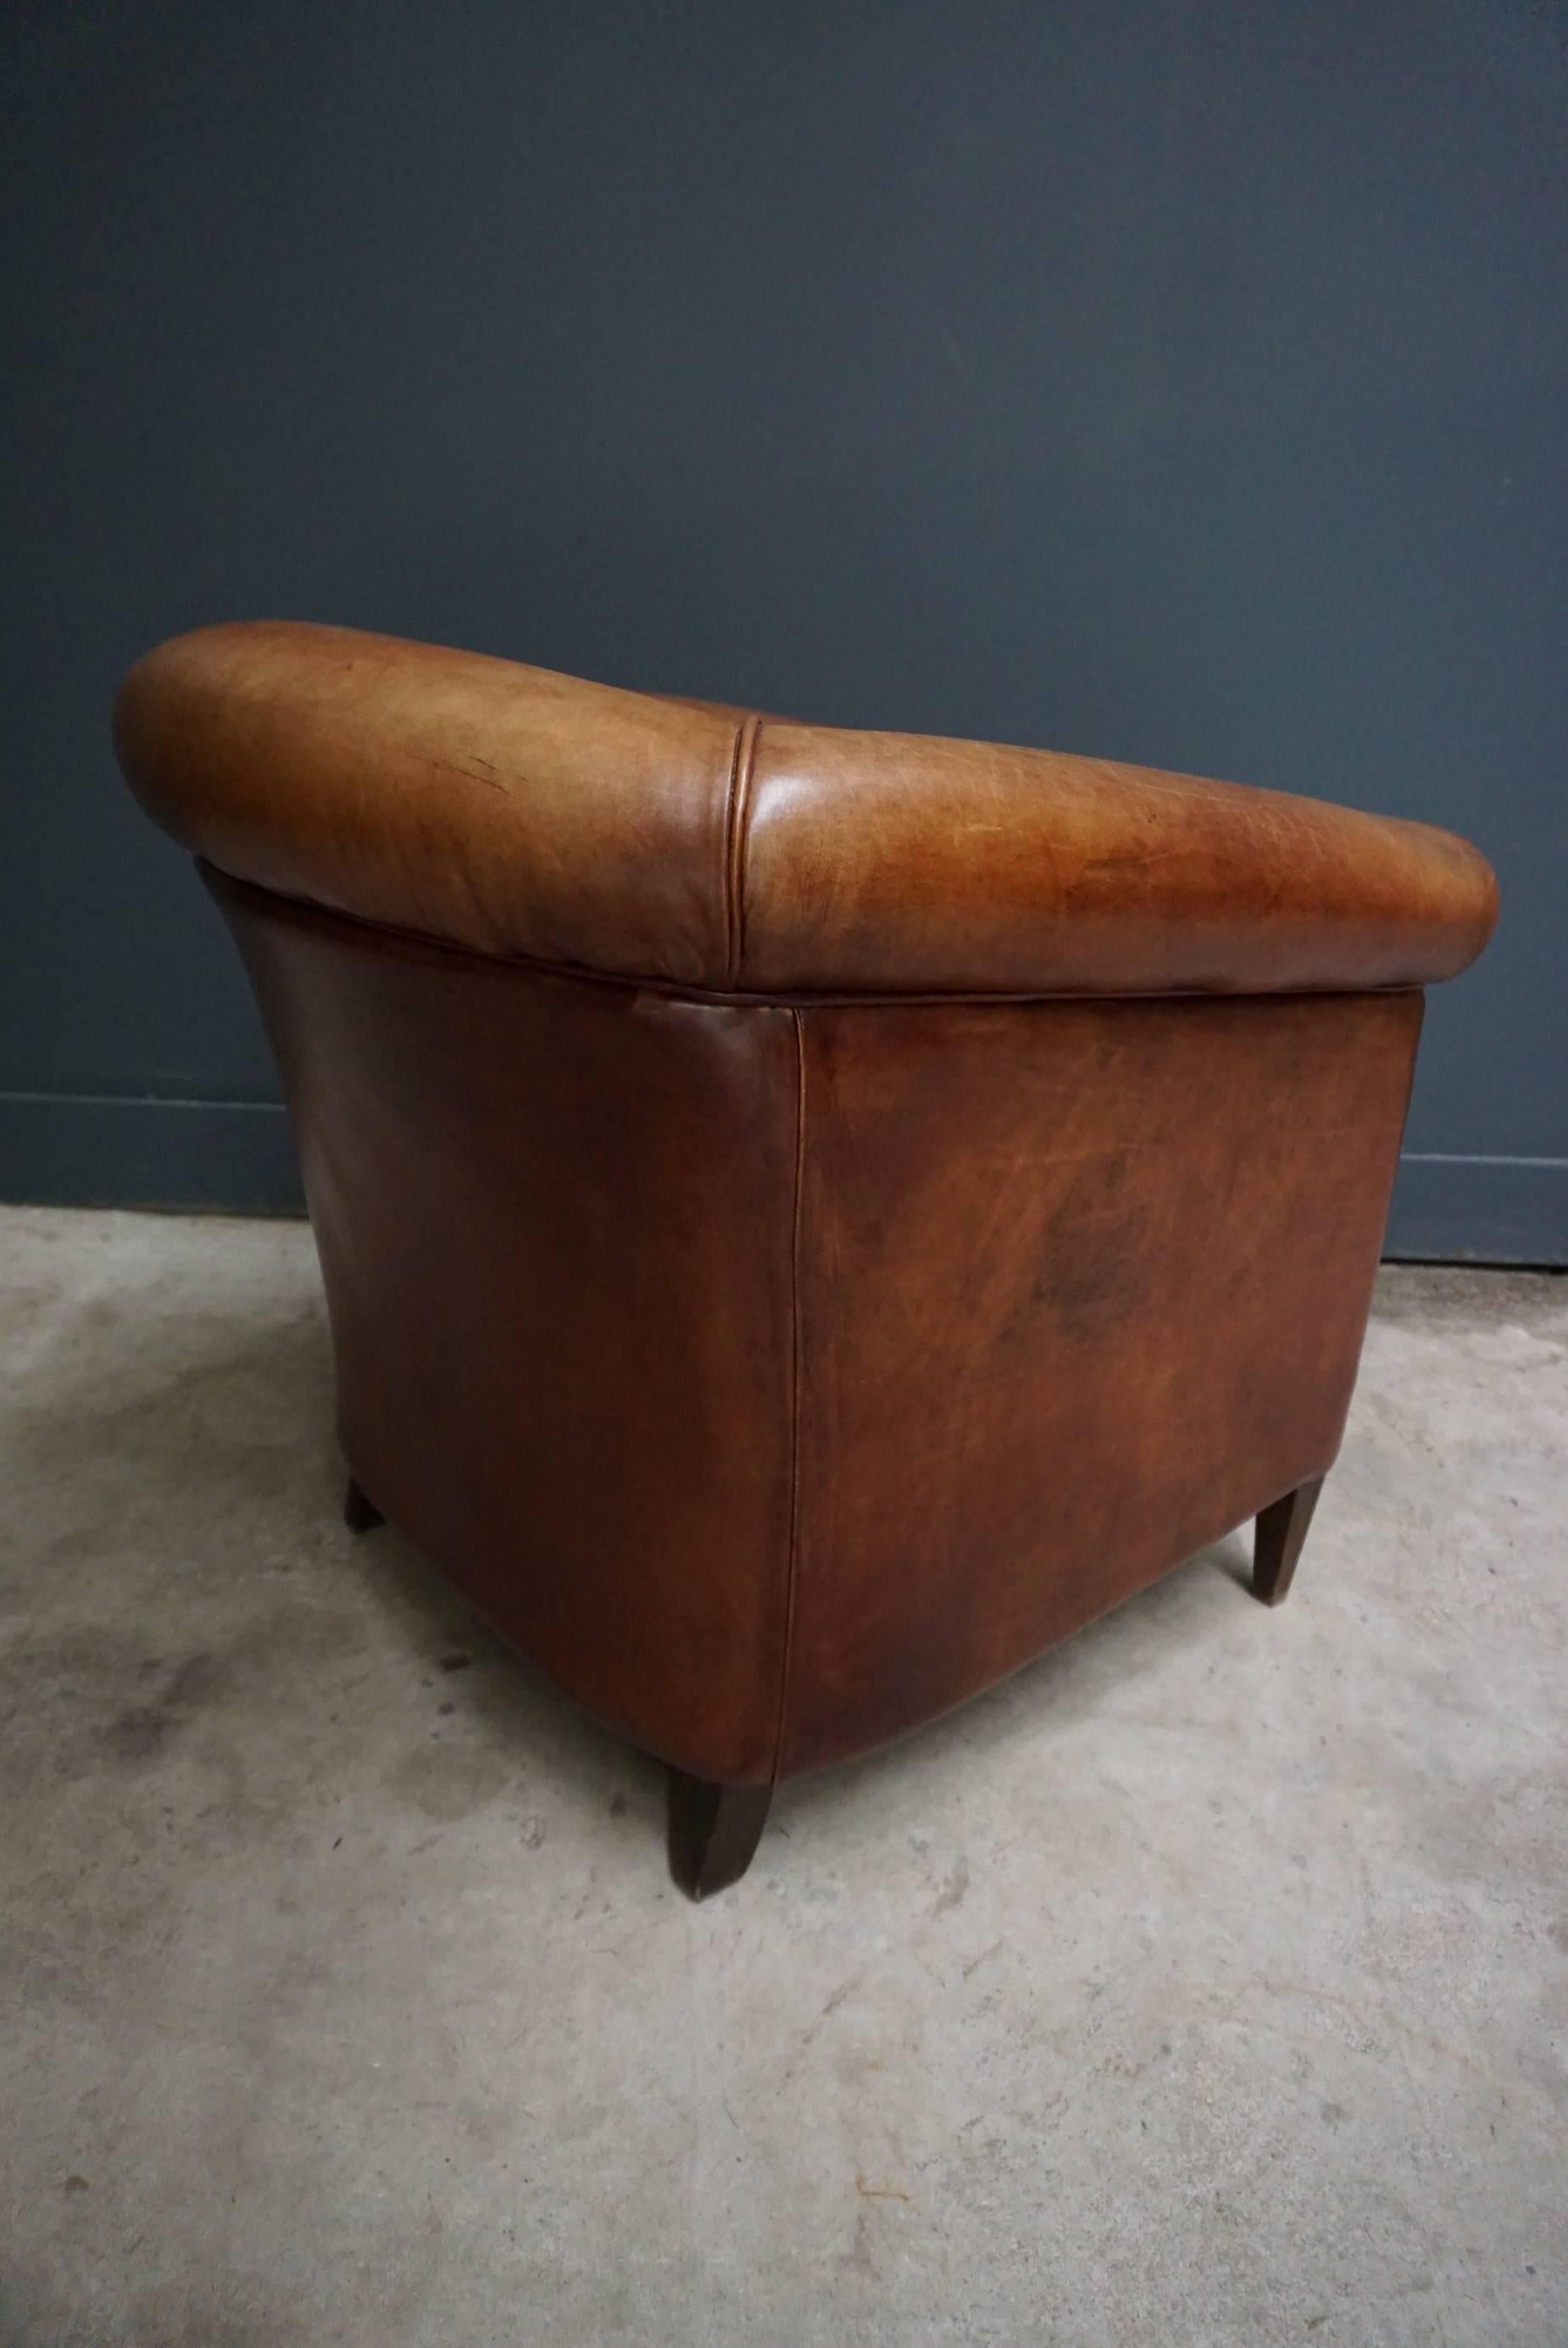 Industrial Dutch Vintage Cognac-Colored Leather Club Chair